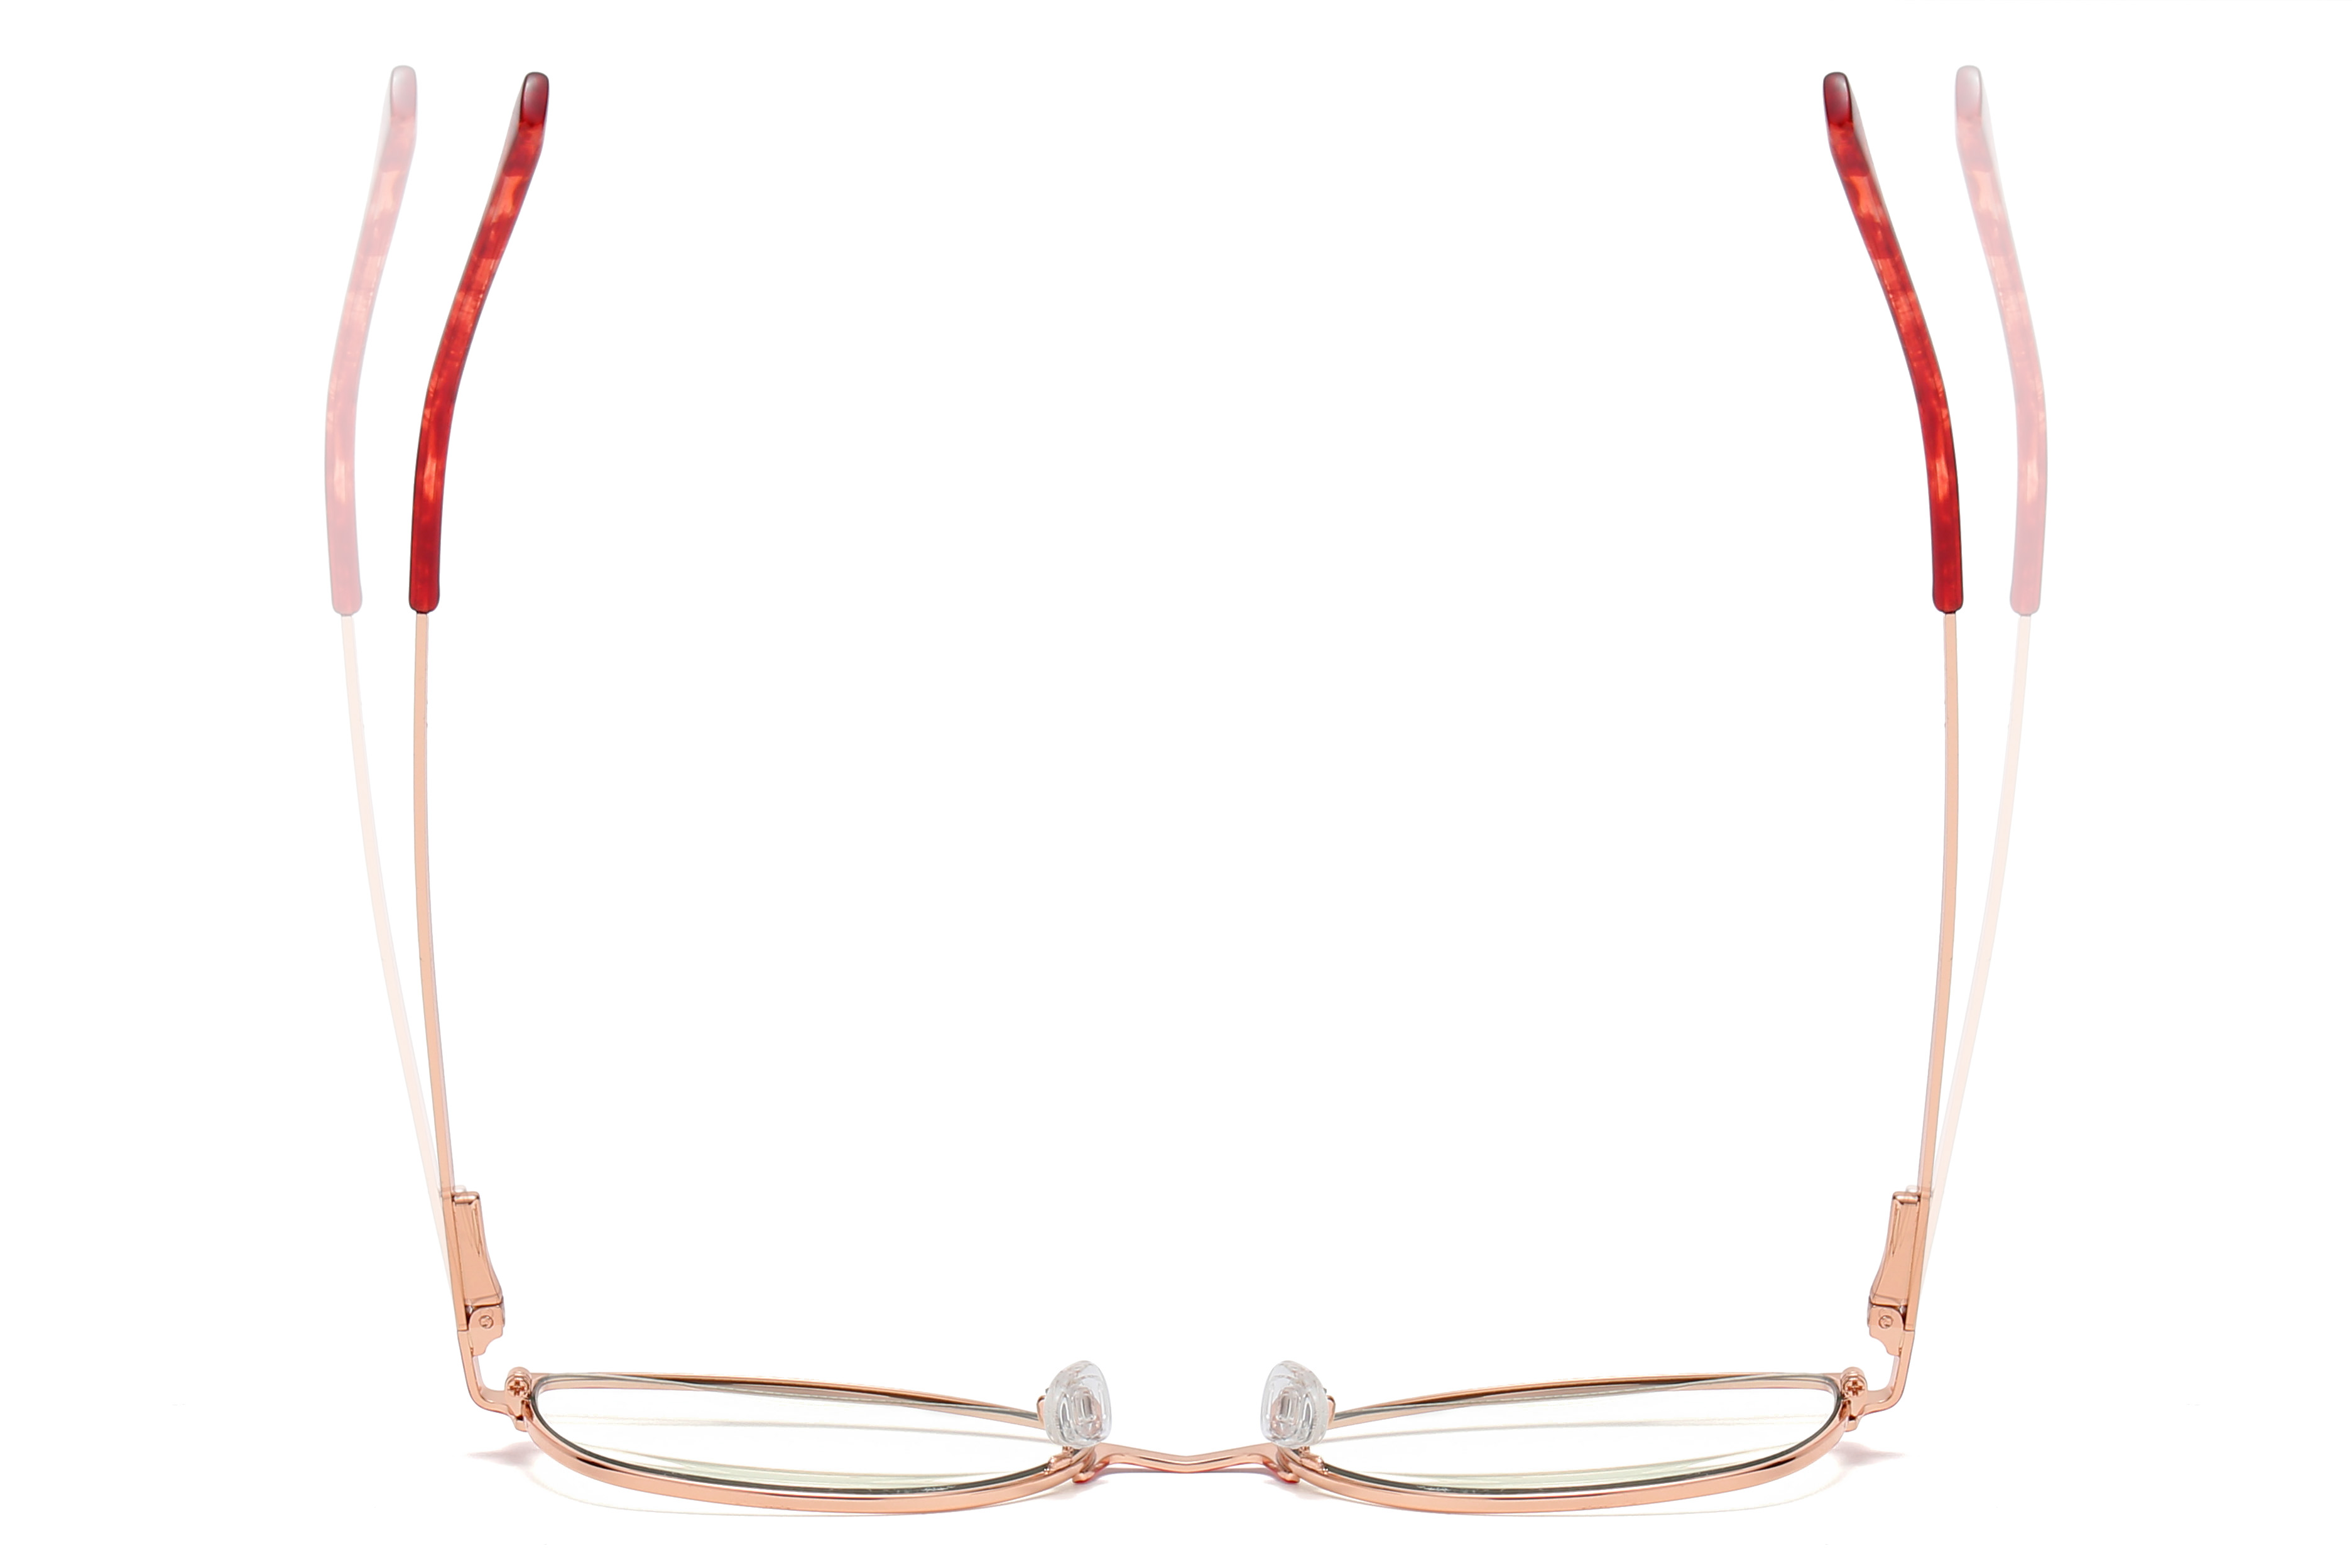 INS HOT Woman's Fashion Optical frame Cat Eye  Eyeglasses Spring Hinge